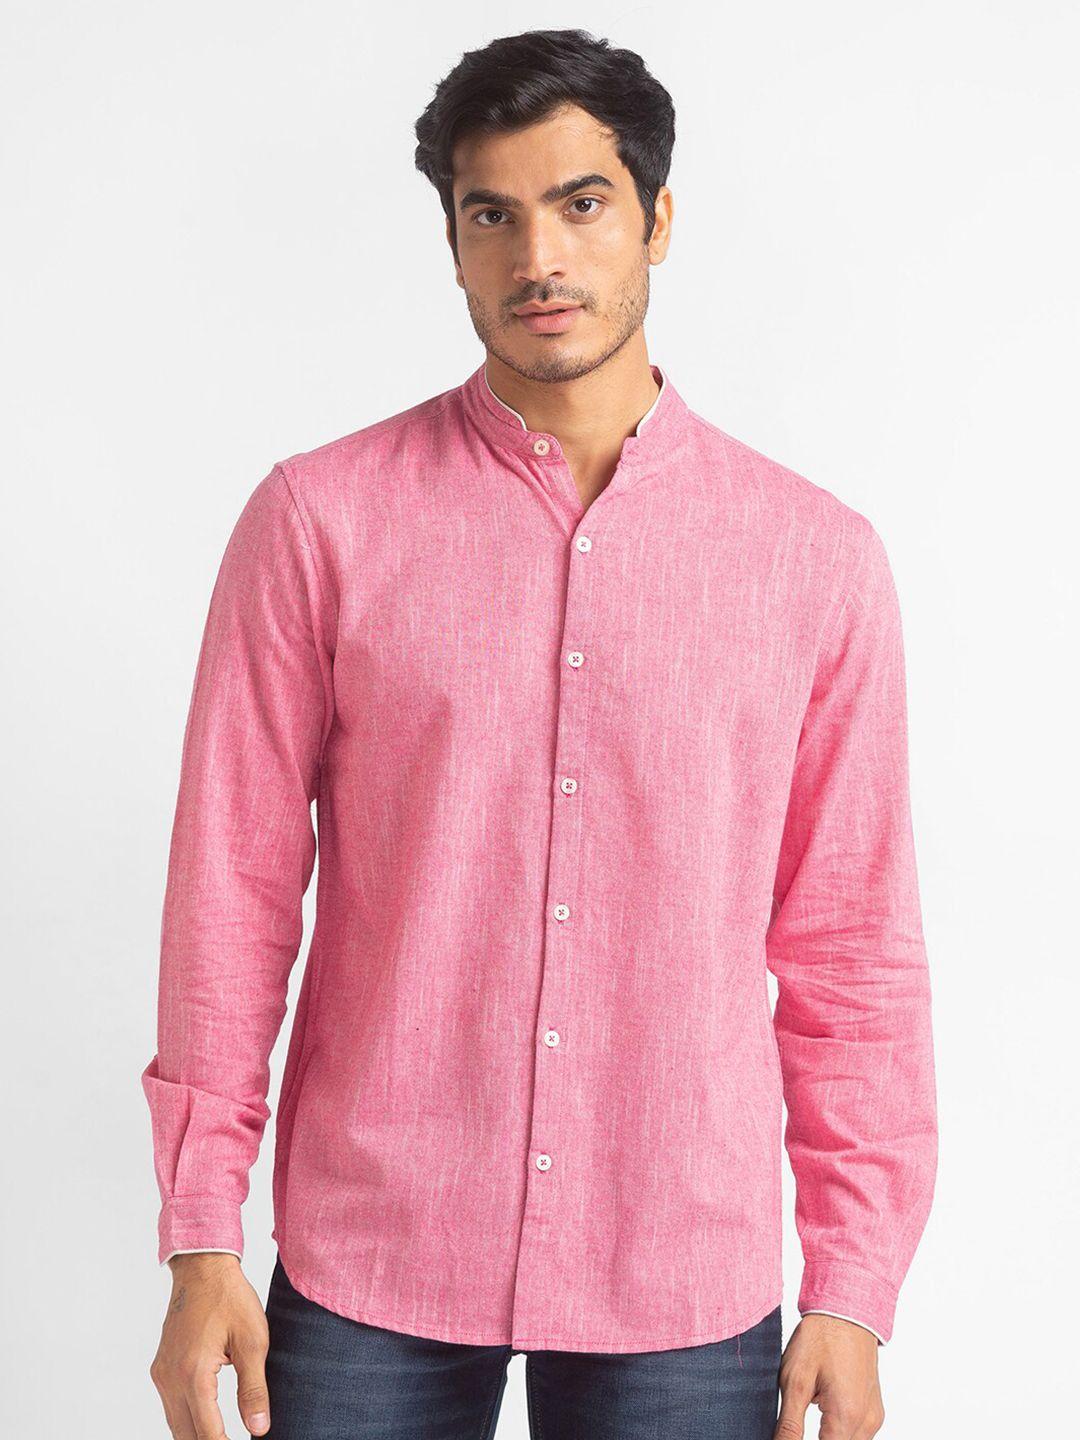 globus-men-pink-solid-shirt